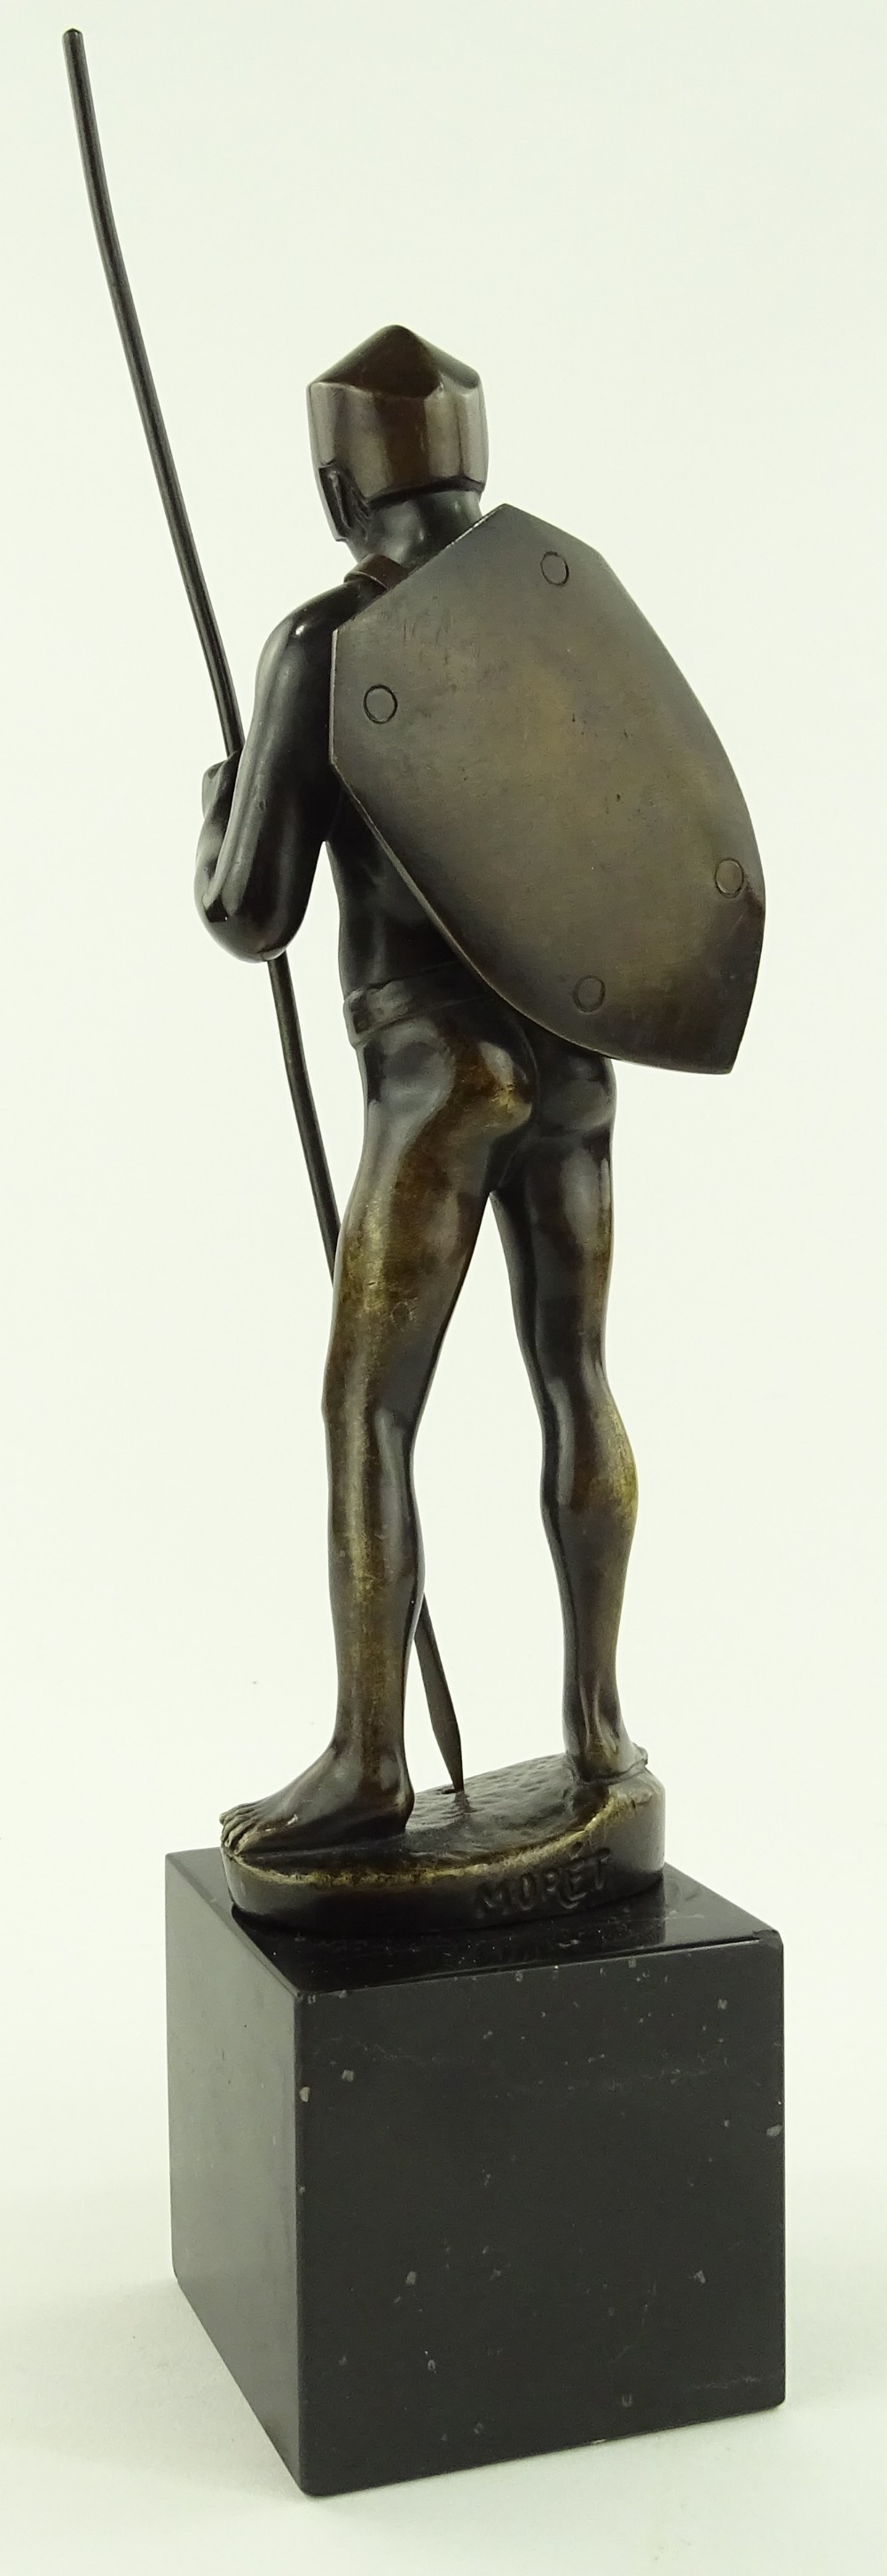 After Moret, a patinated bronze sculpture, Warrior - Image 2 of 3